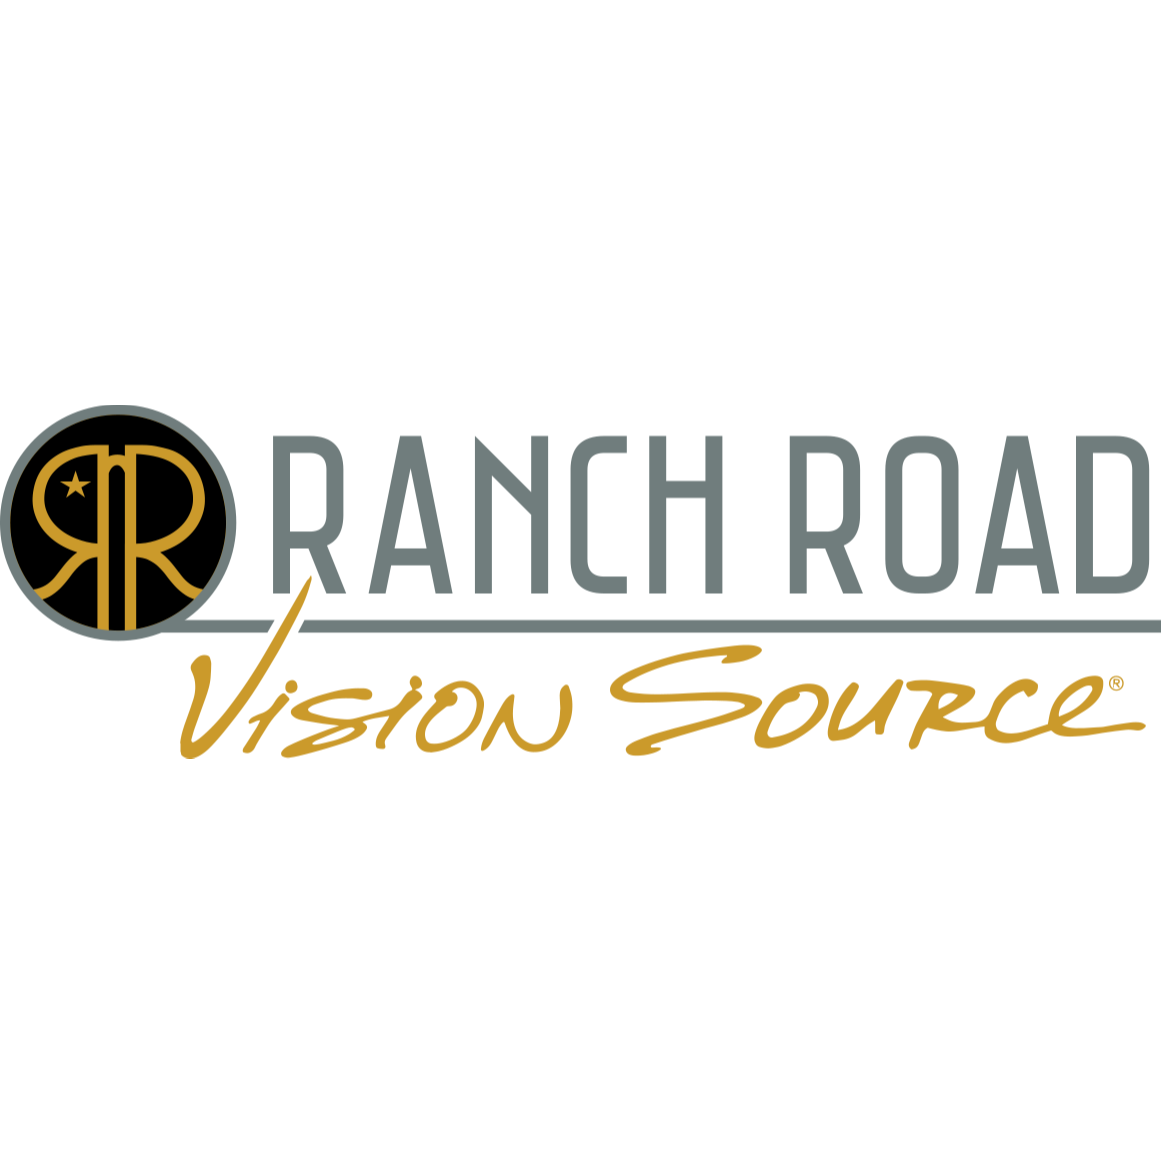 Ranch Road Vision Source